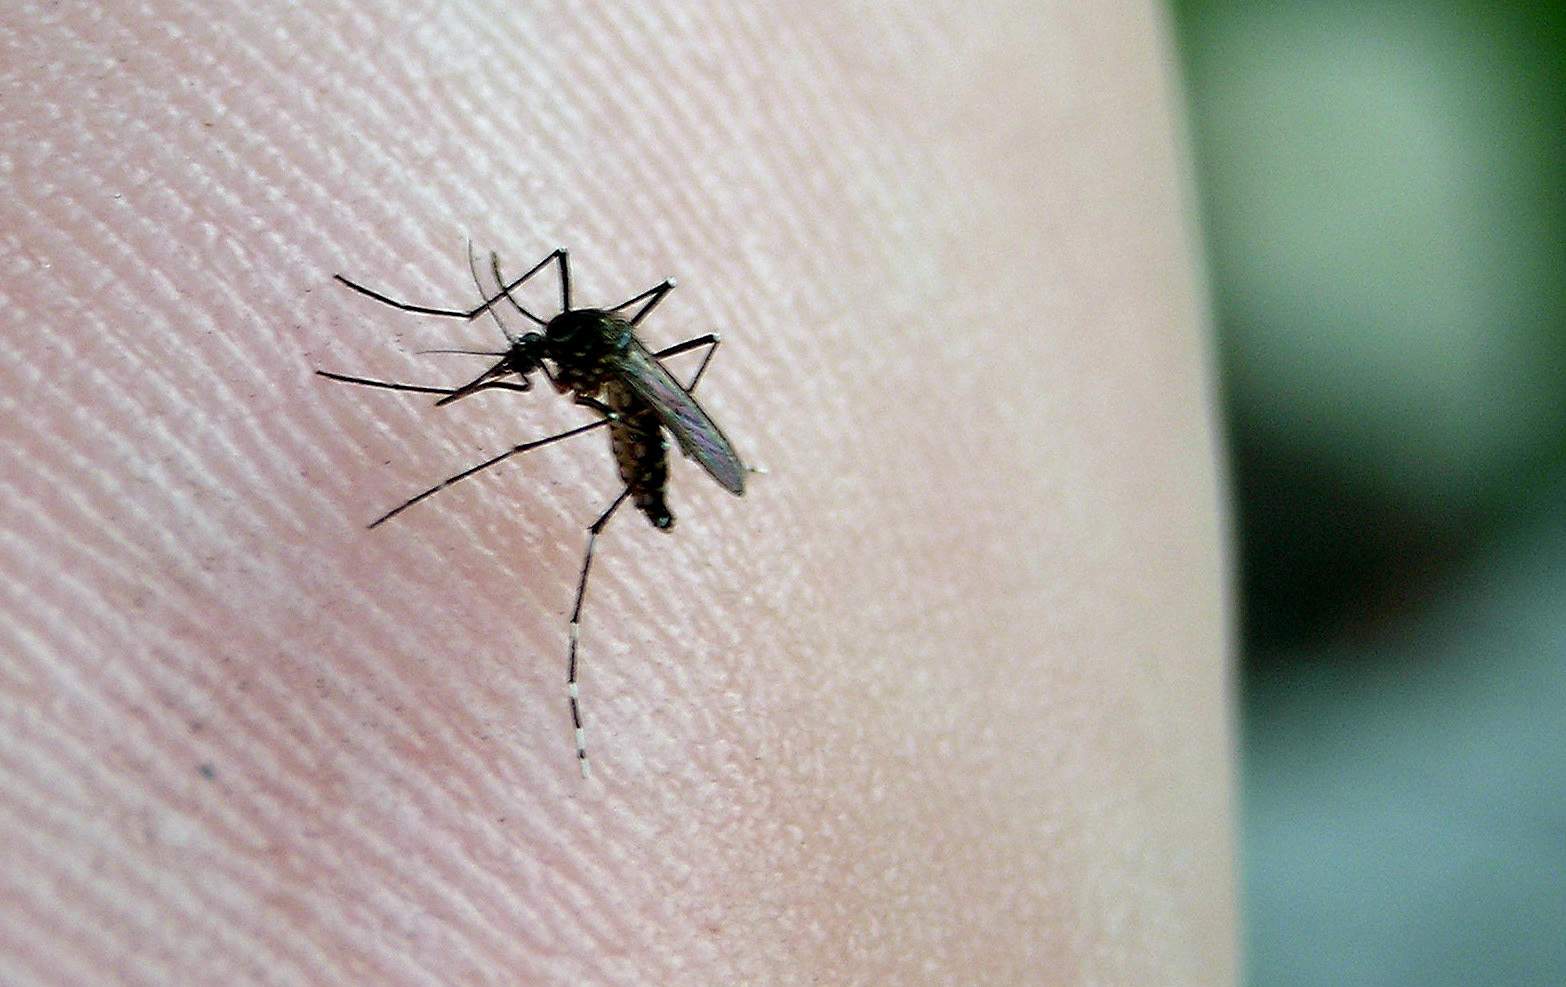 Chikungunya – The Facts